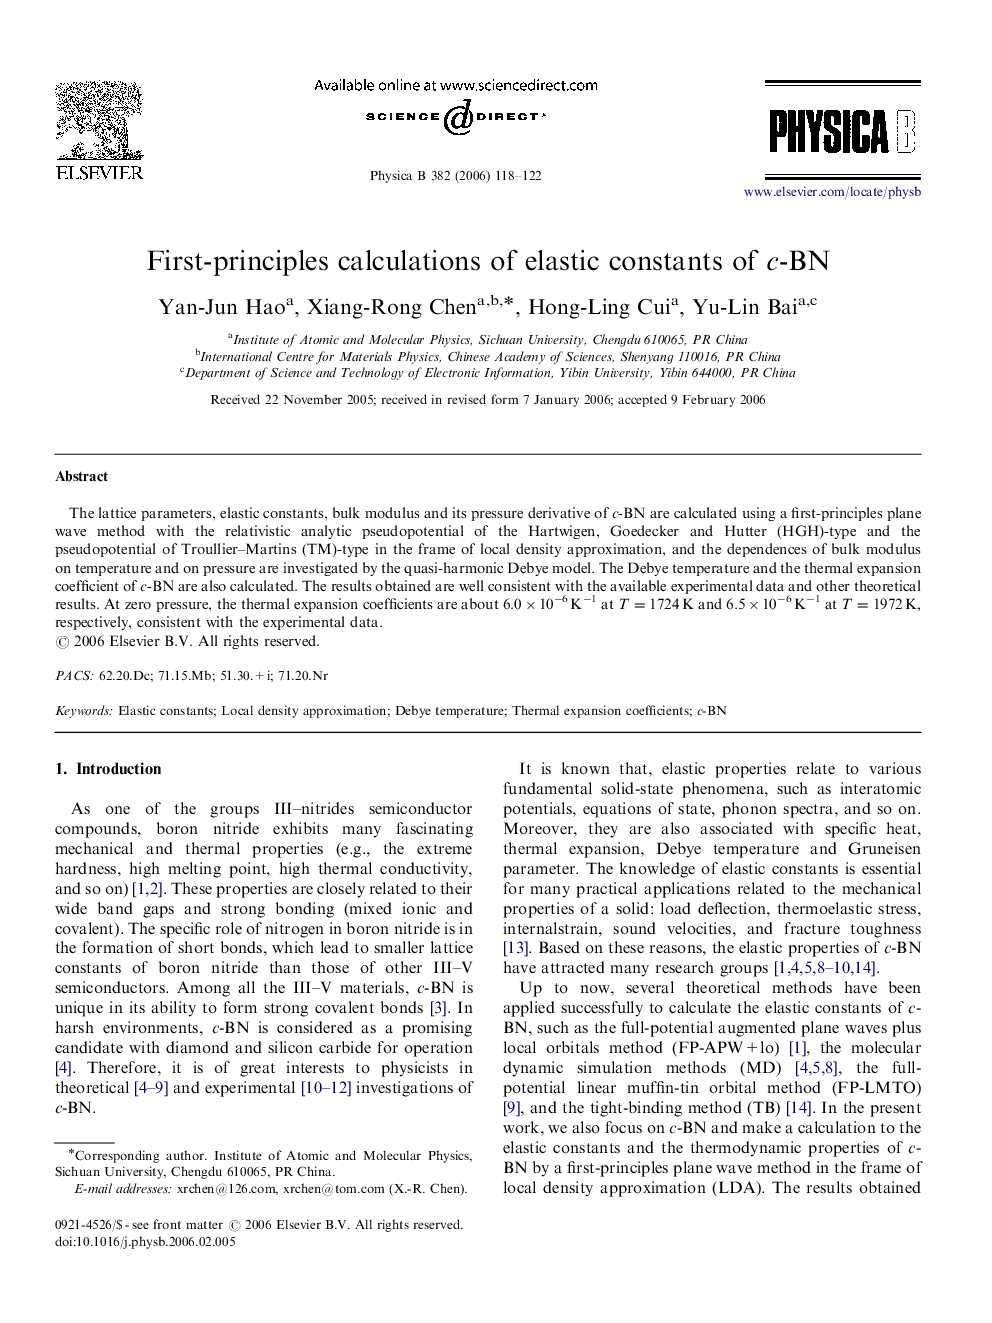 First-principles calculations of elastic constants of c-BN